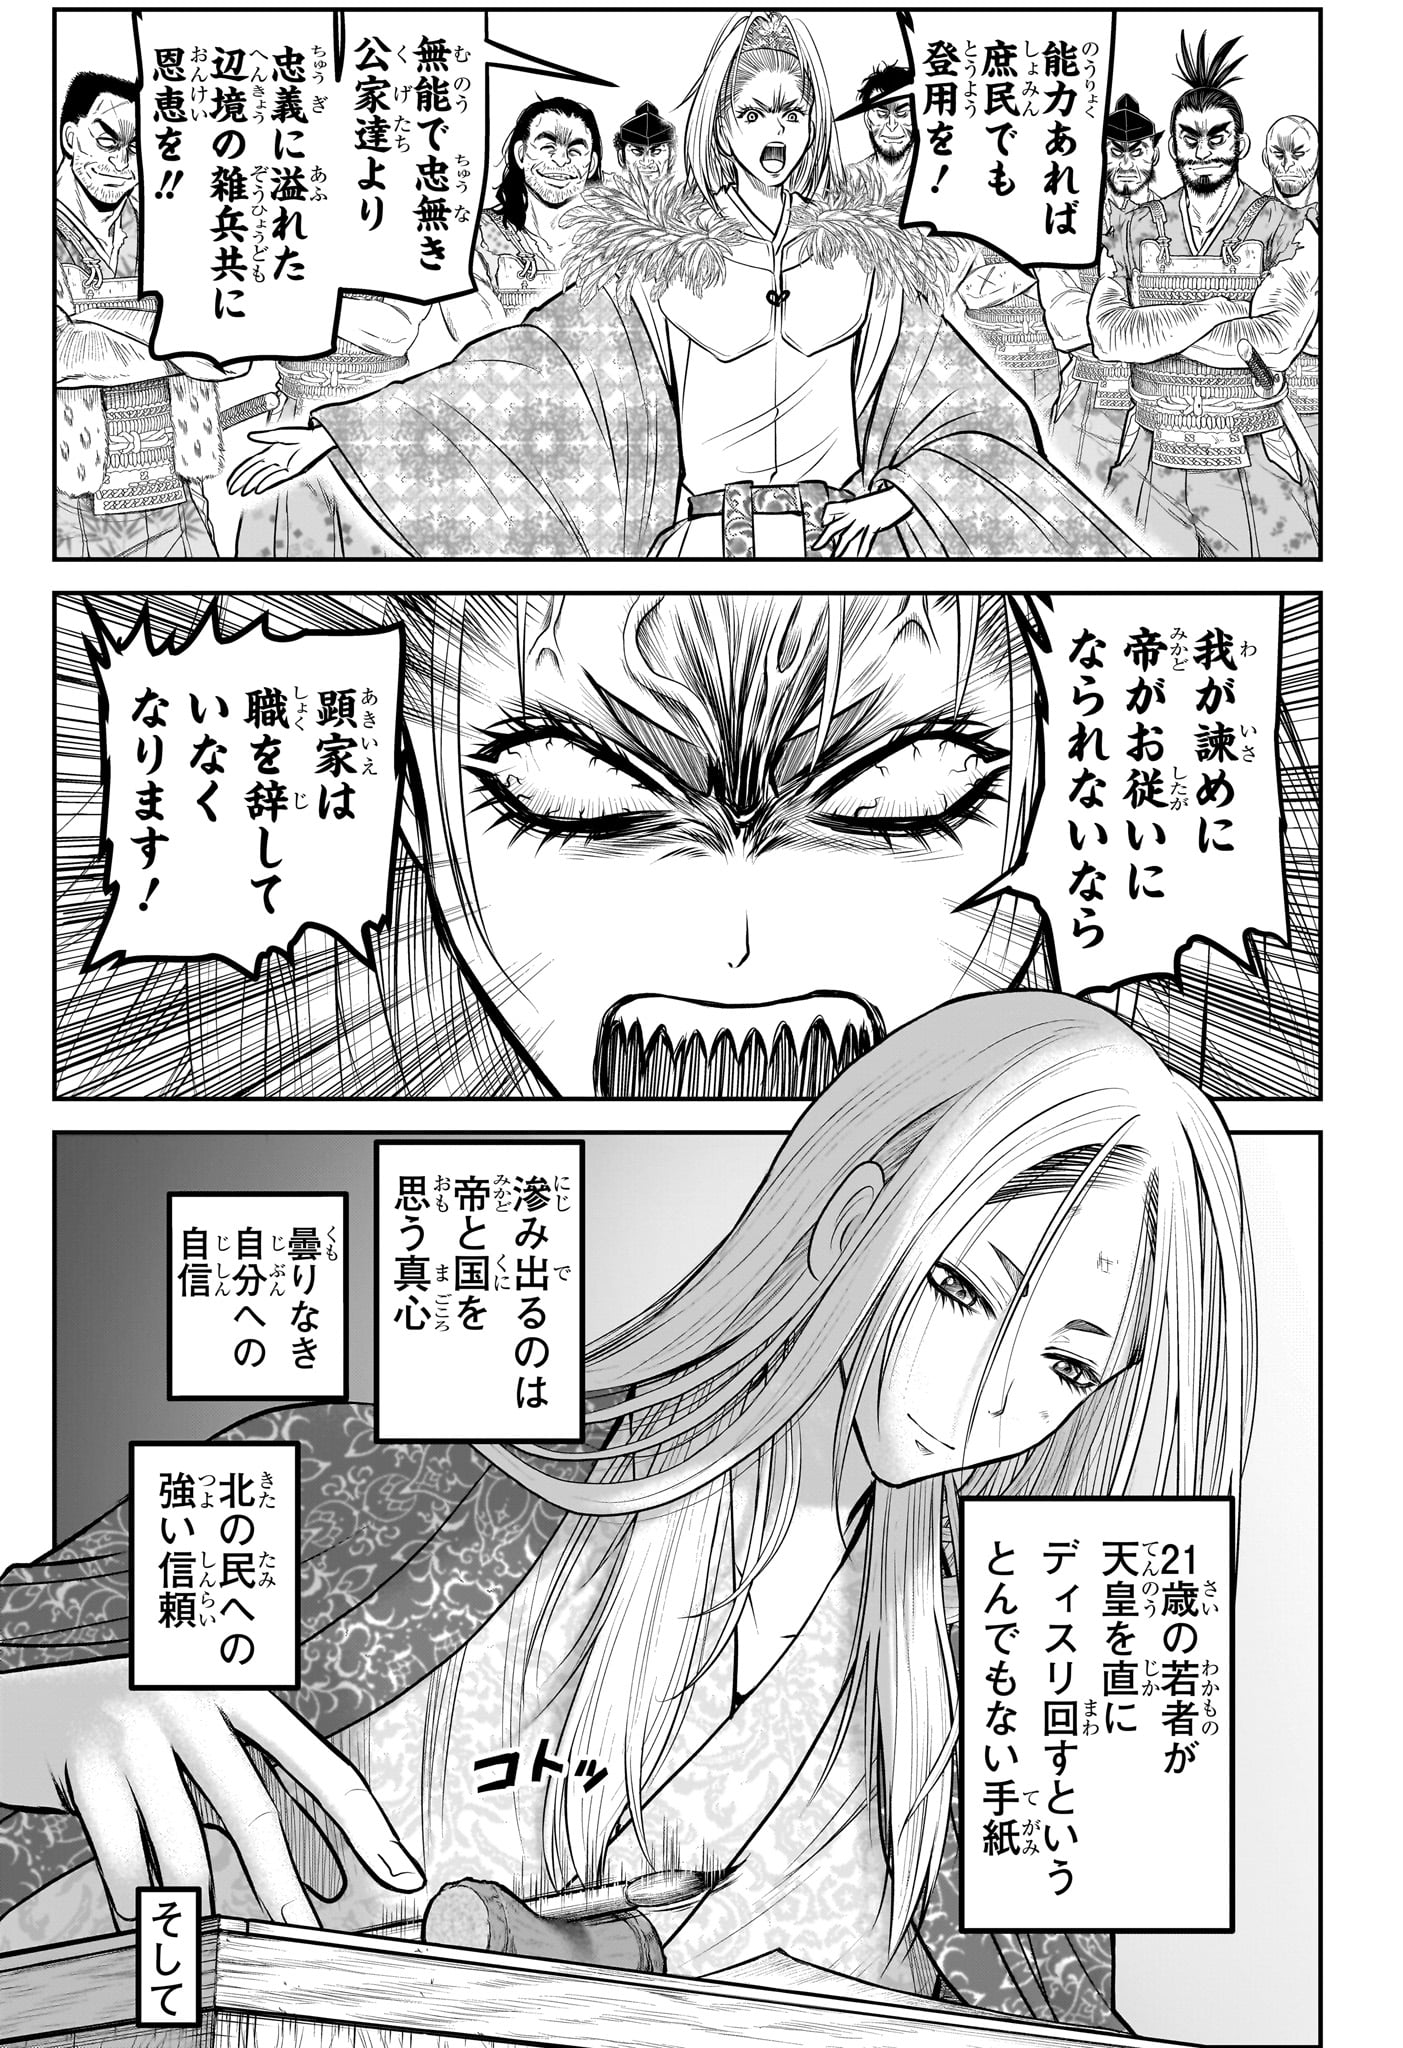 Nige Jouzu no Wakagimi - Chapter 156 - Page 13